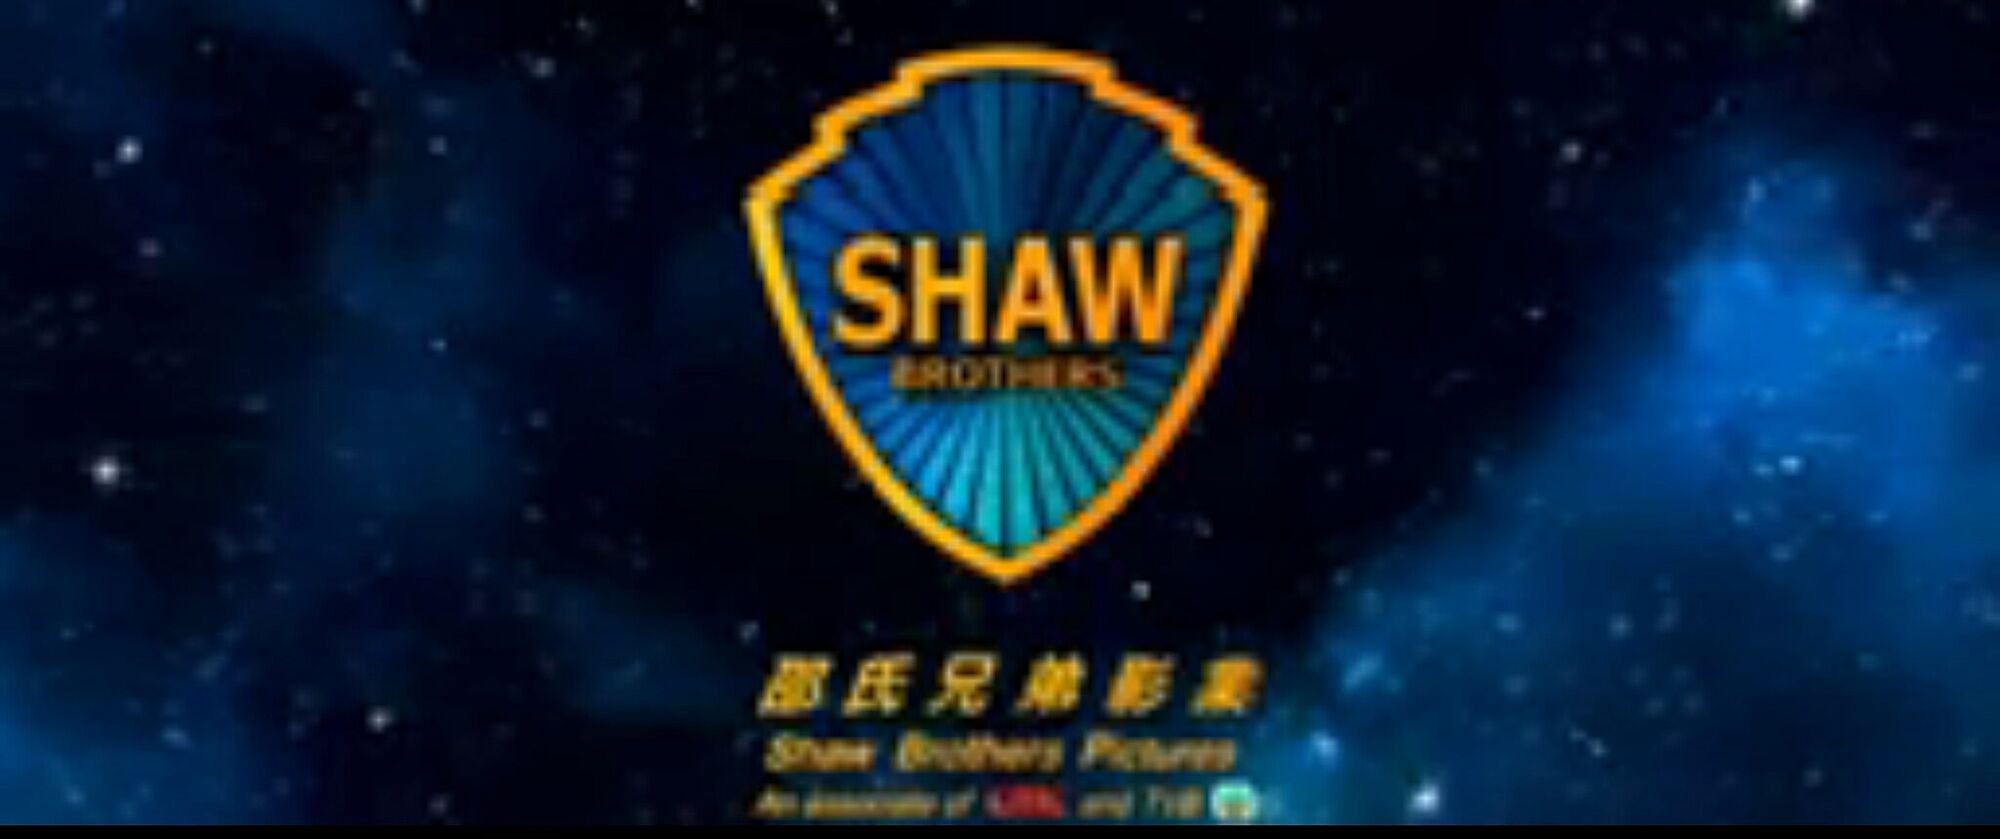 Бразер шоу. Shaw brothers. Brothers Studio. Shaw Studios. Shaw brothers общее фото.